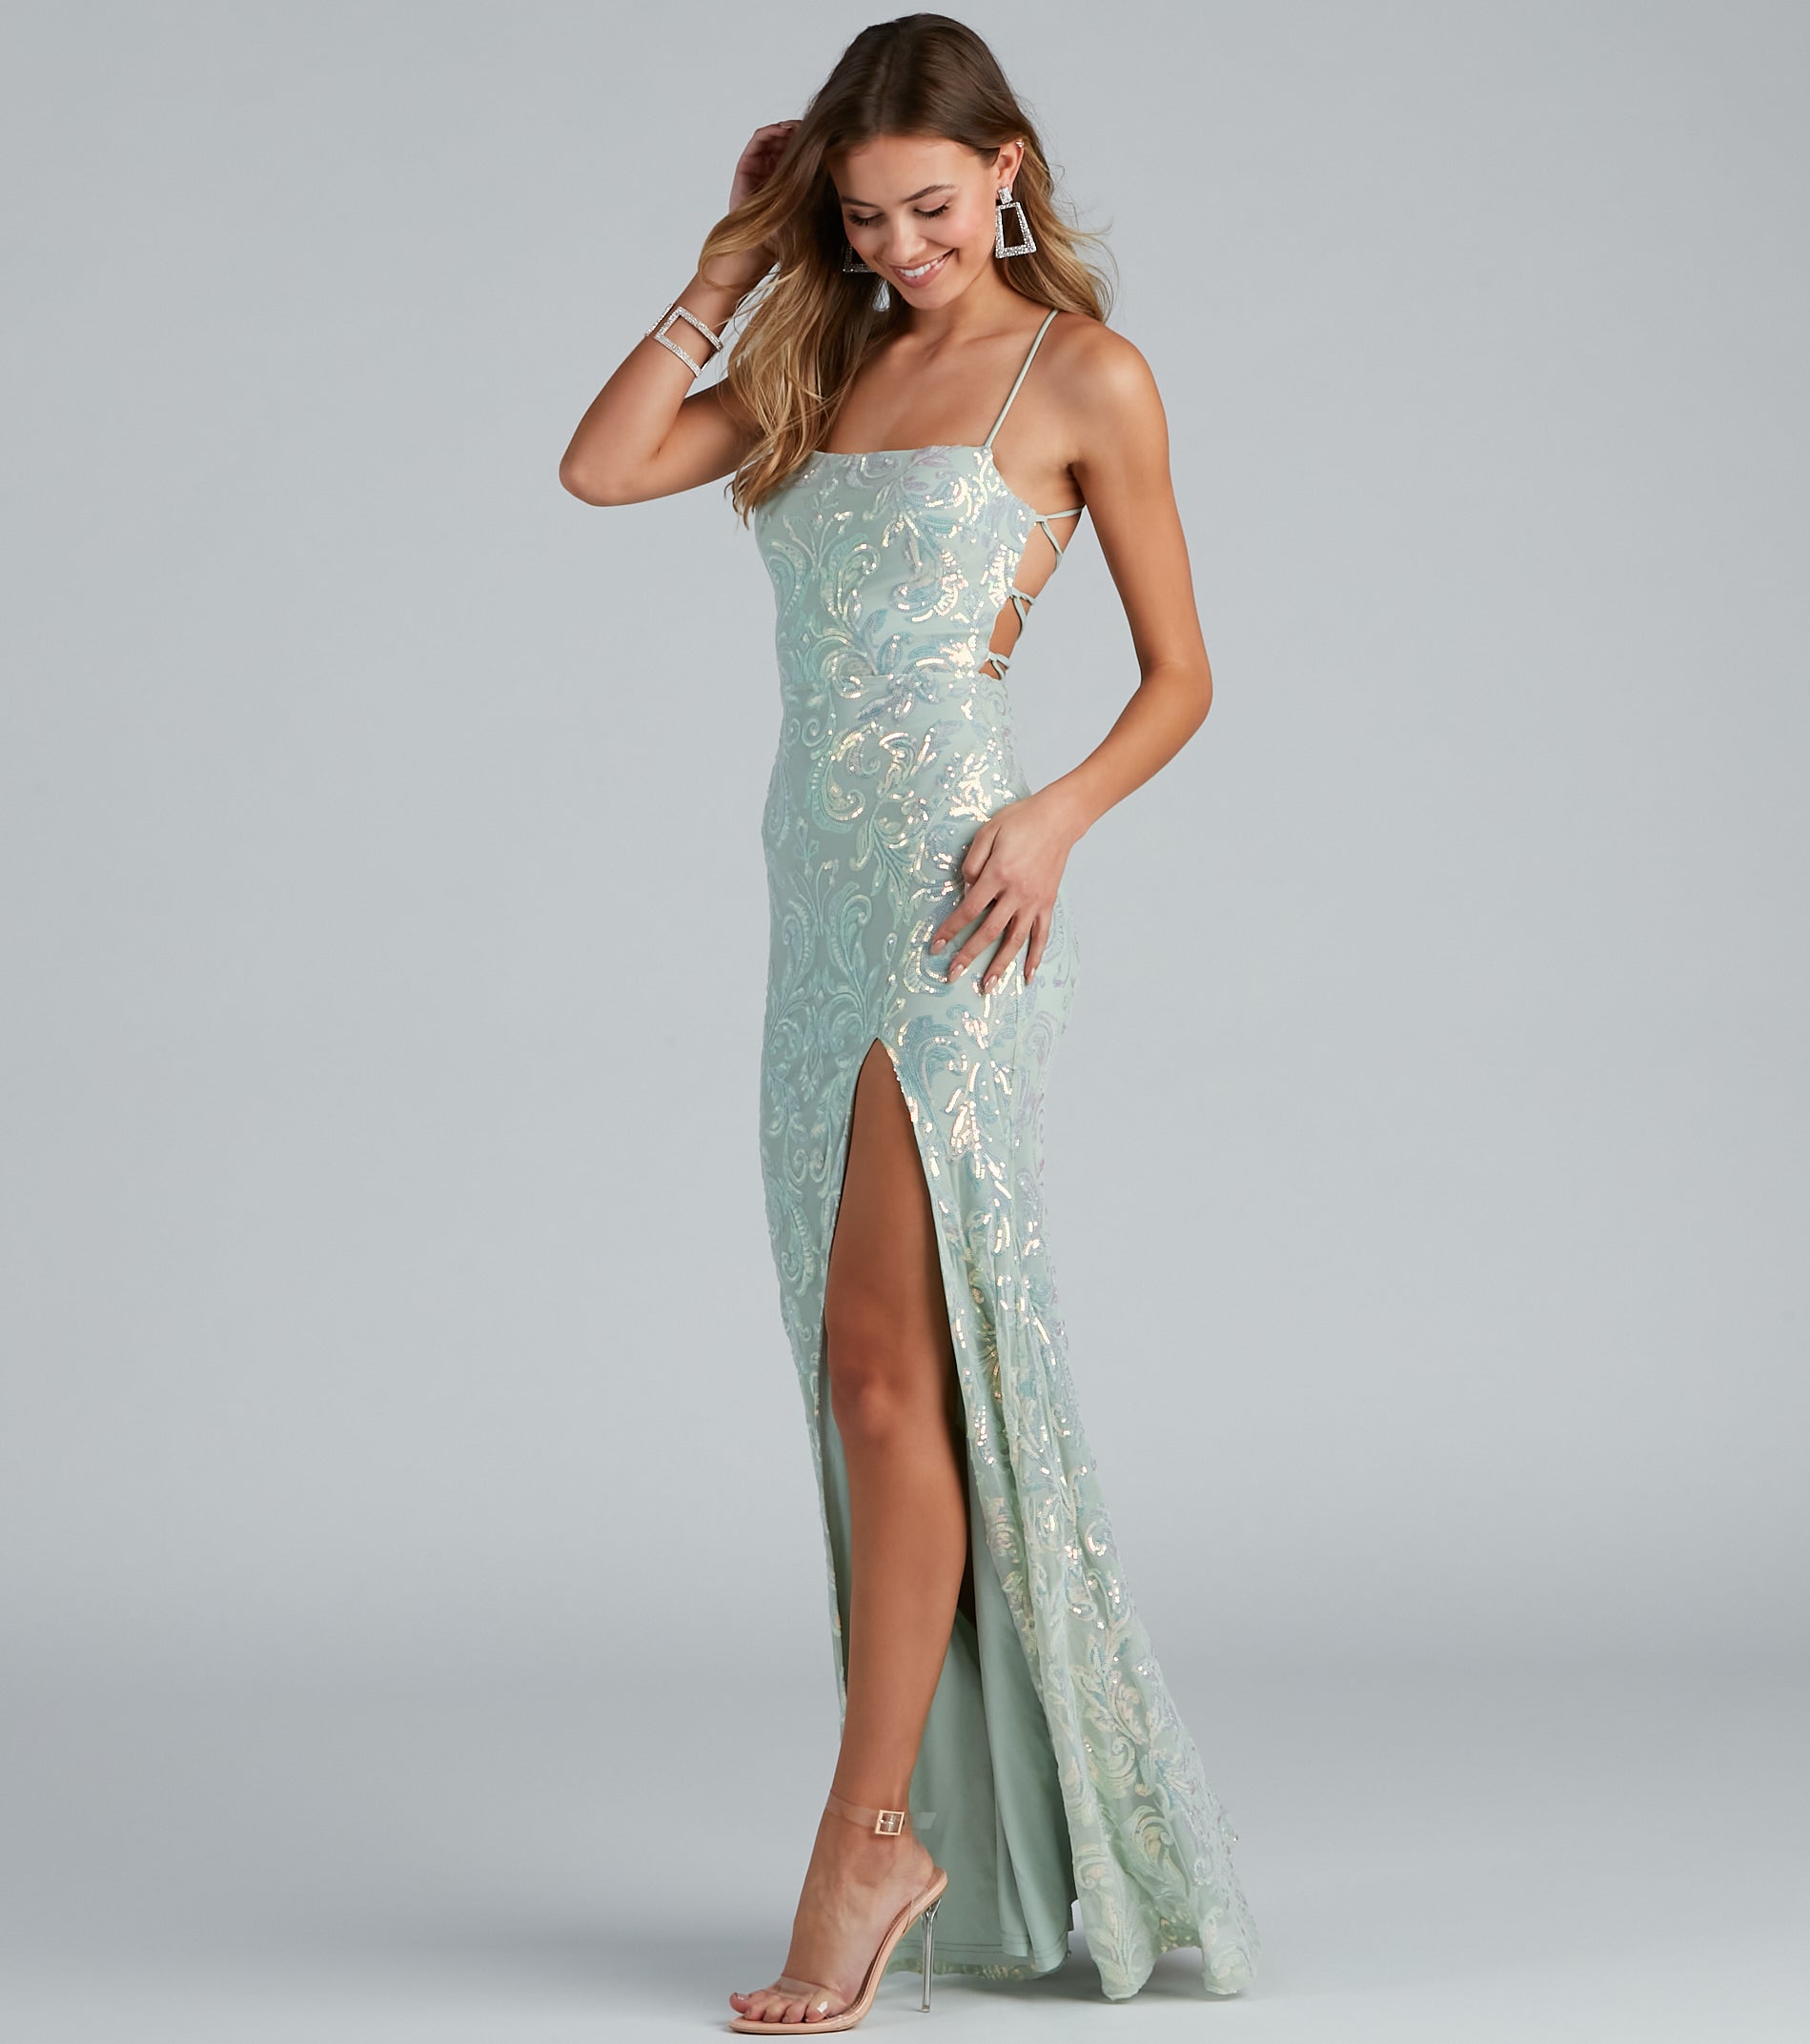 Edlyn Sequin Laceup Mermaid Formal Dress & Windsor